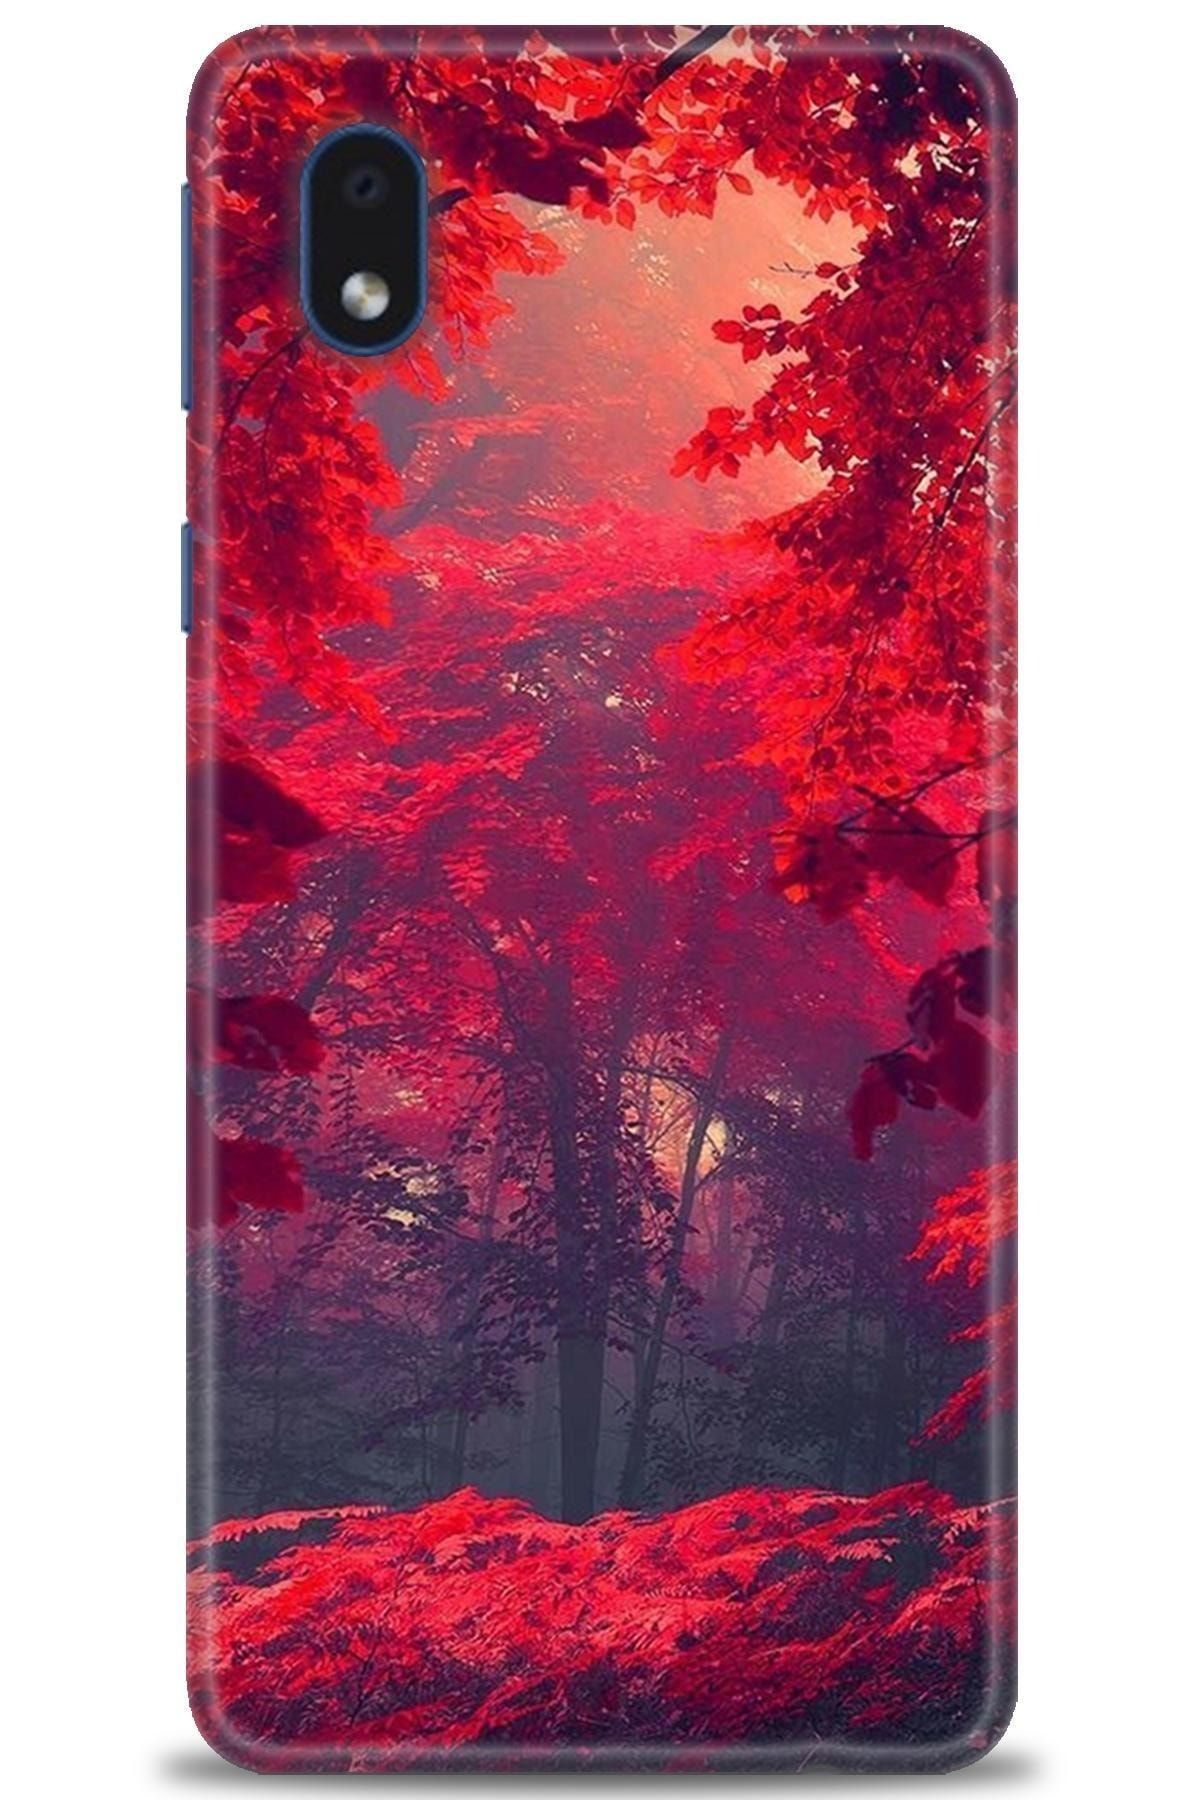 adveksiyon Samsung Galaxy A01 Core Kılıf Hd Baskılı Kılıf - Kızıl Bahar + 5d Mat Seramik Ekran Koruyucu